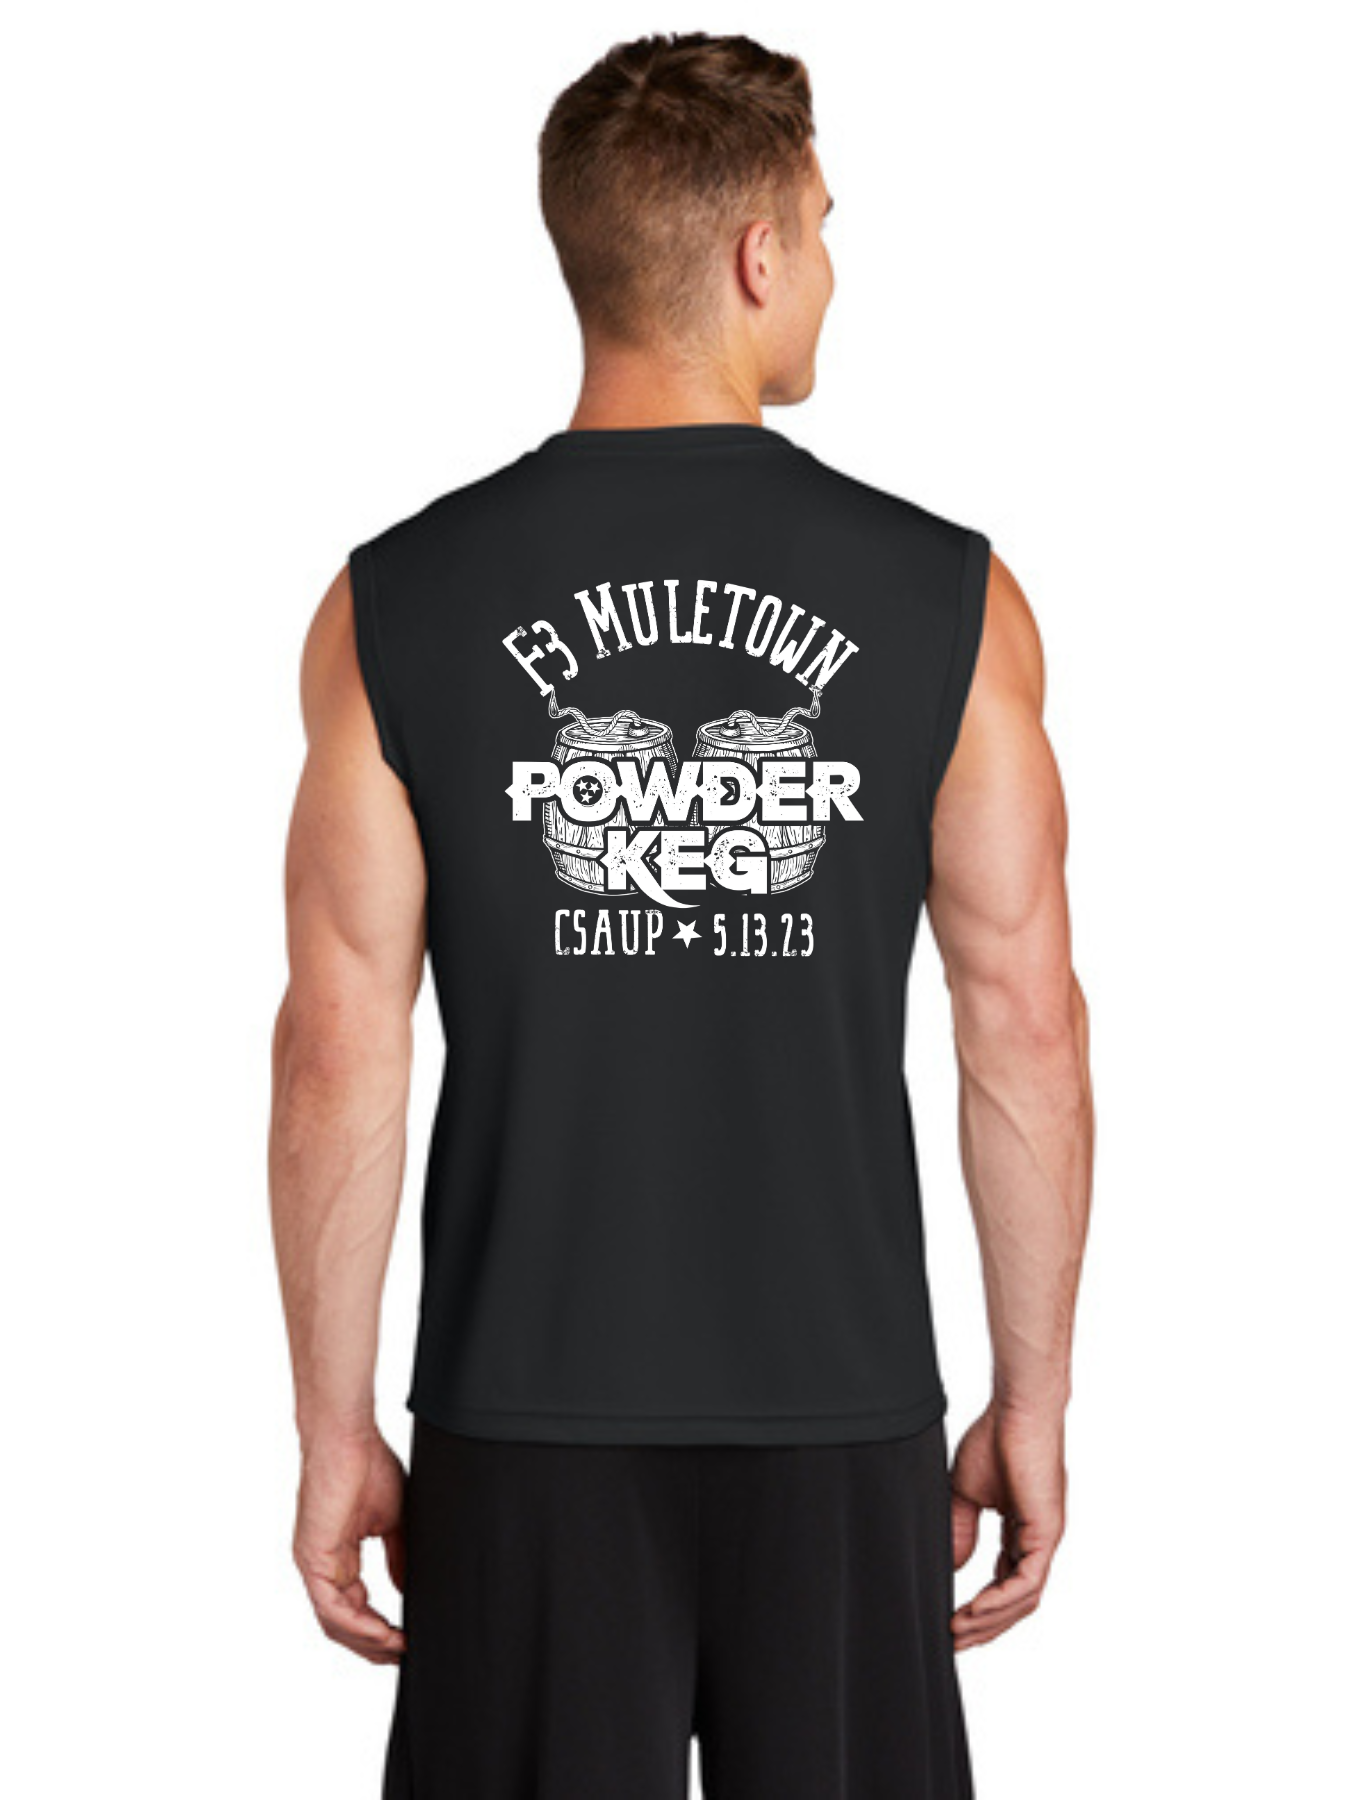 F3 Muletown Powder Keg Pre-Order March 2023